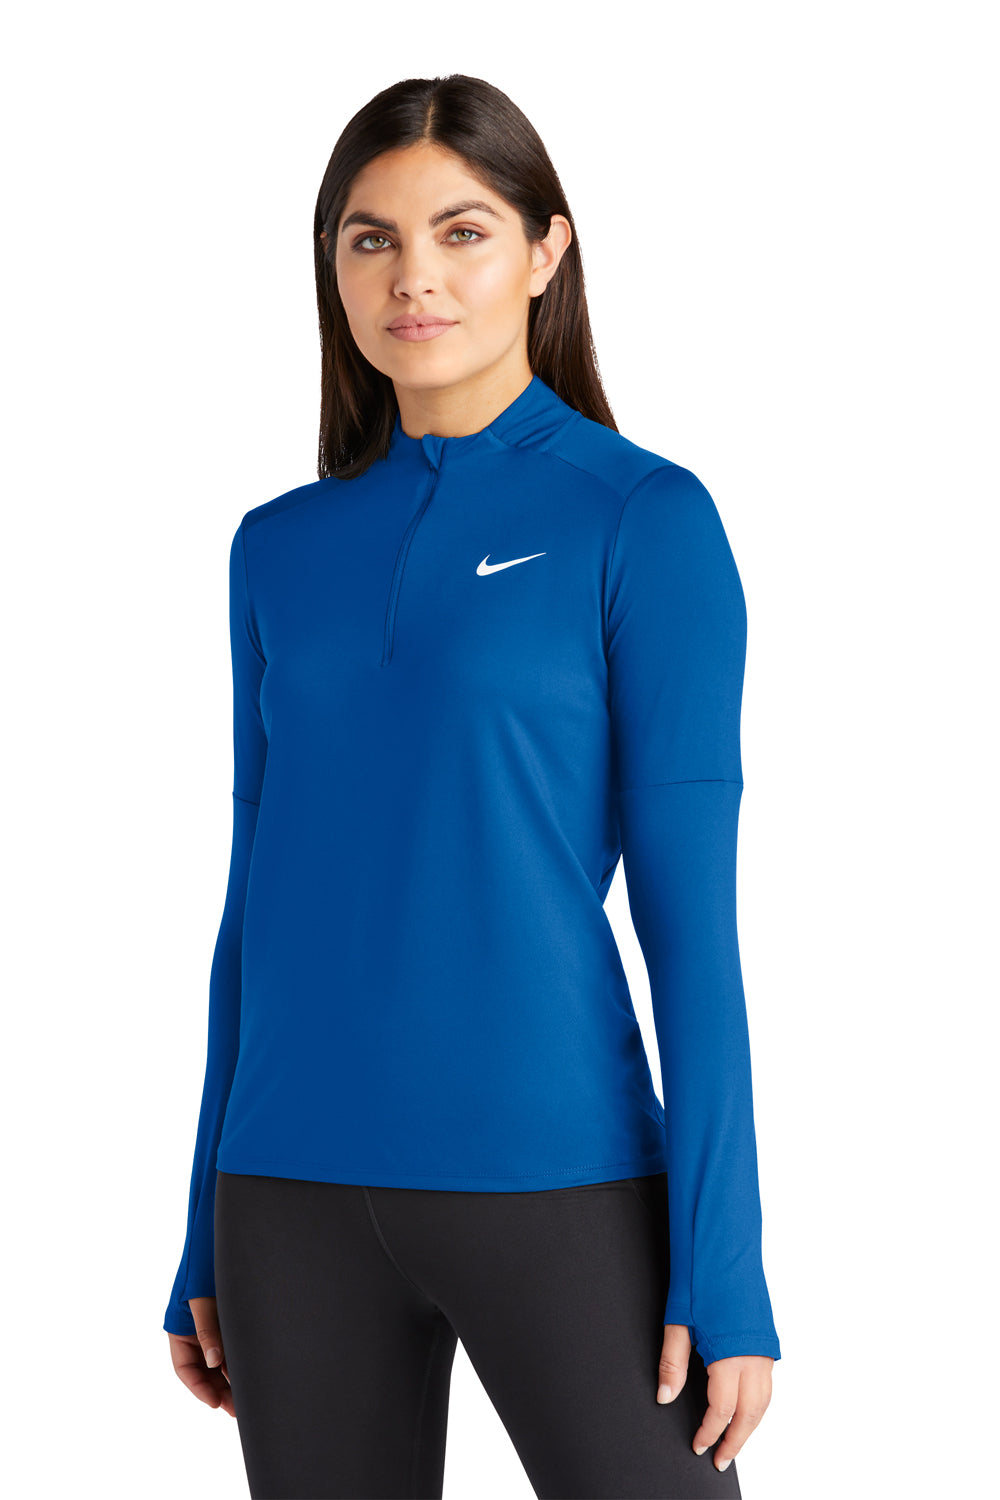 Nike NKDH4951 Womens Element Dri-Fit Moisture Wicking 1/4 Zip Sweatshirt Royal Blue Model 3Q